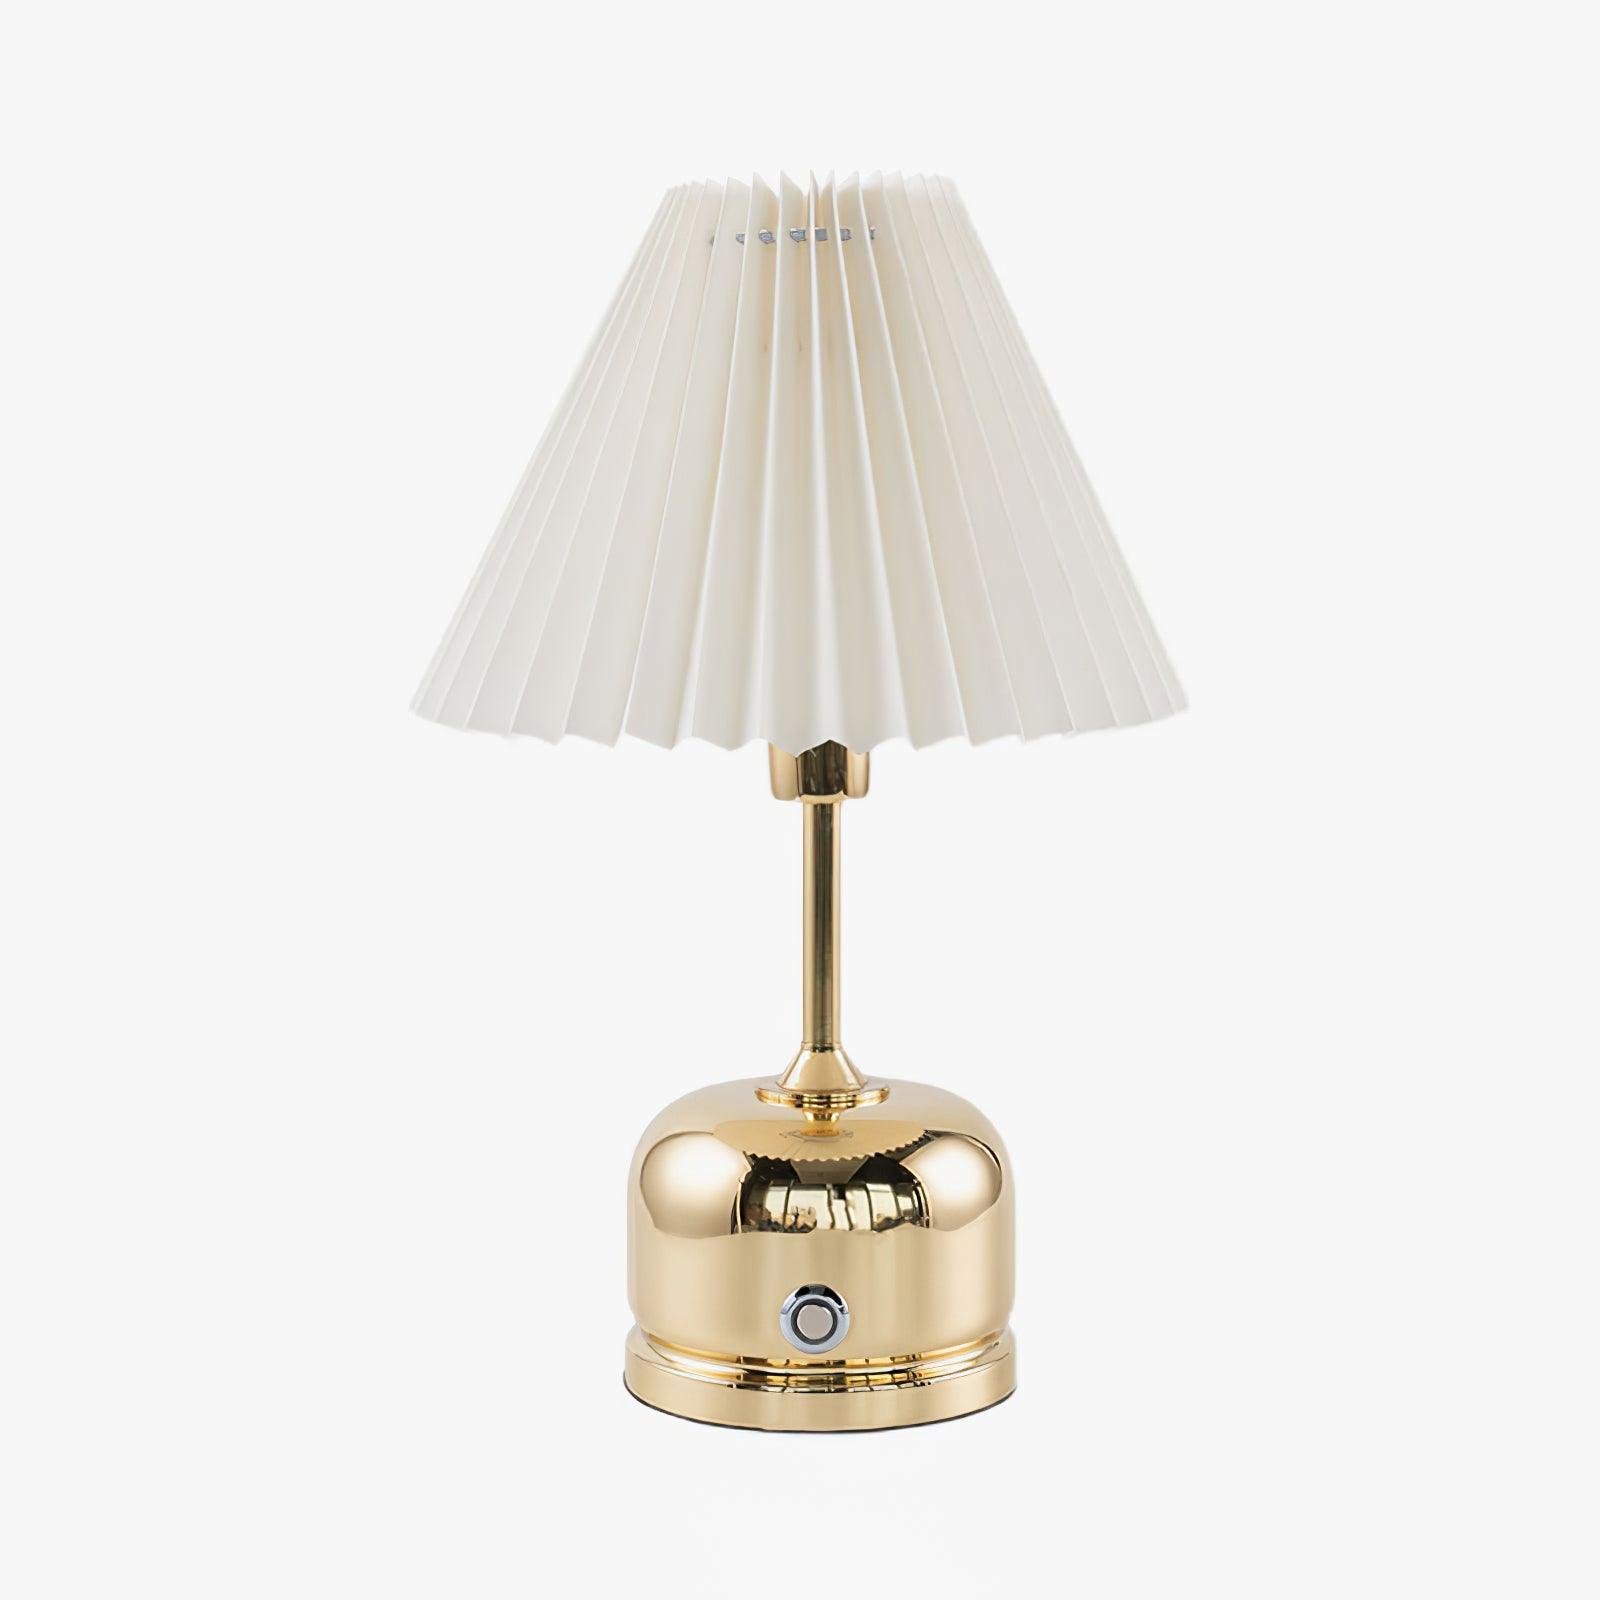 Antique Gold Metal Table Lamp with UK Plug, measuring ∅ 8.7″ x H 13″ (Dia 22cm x H 33cm)